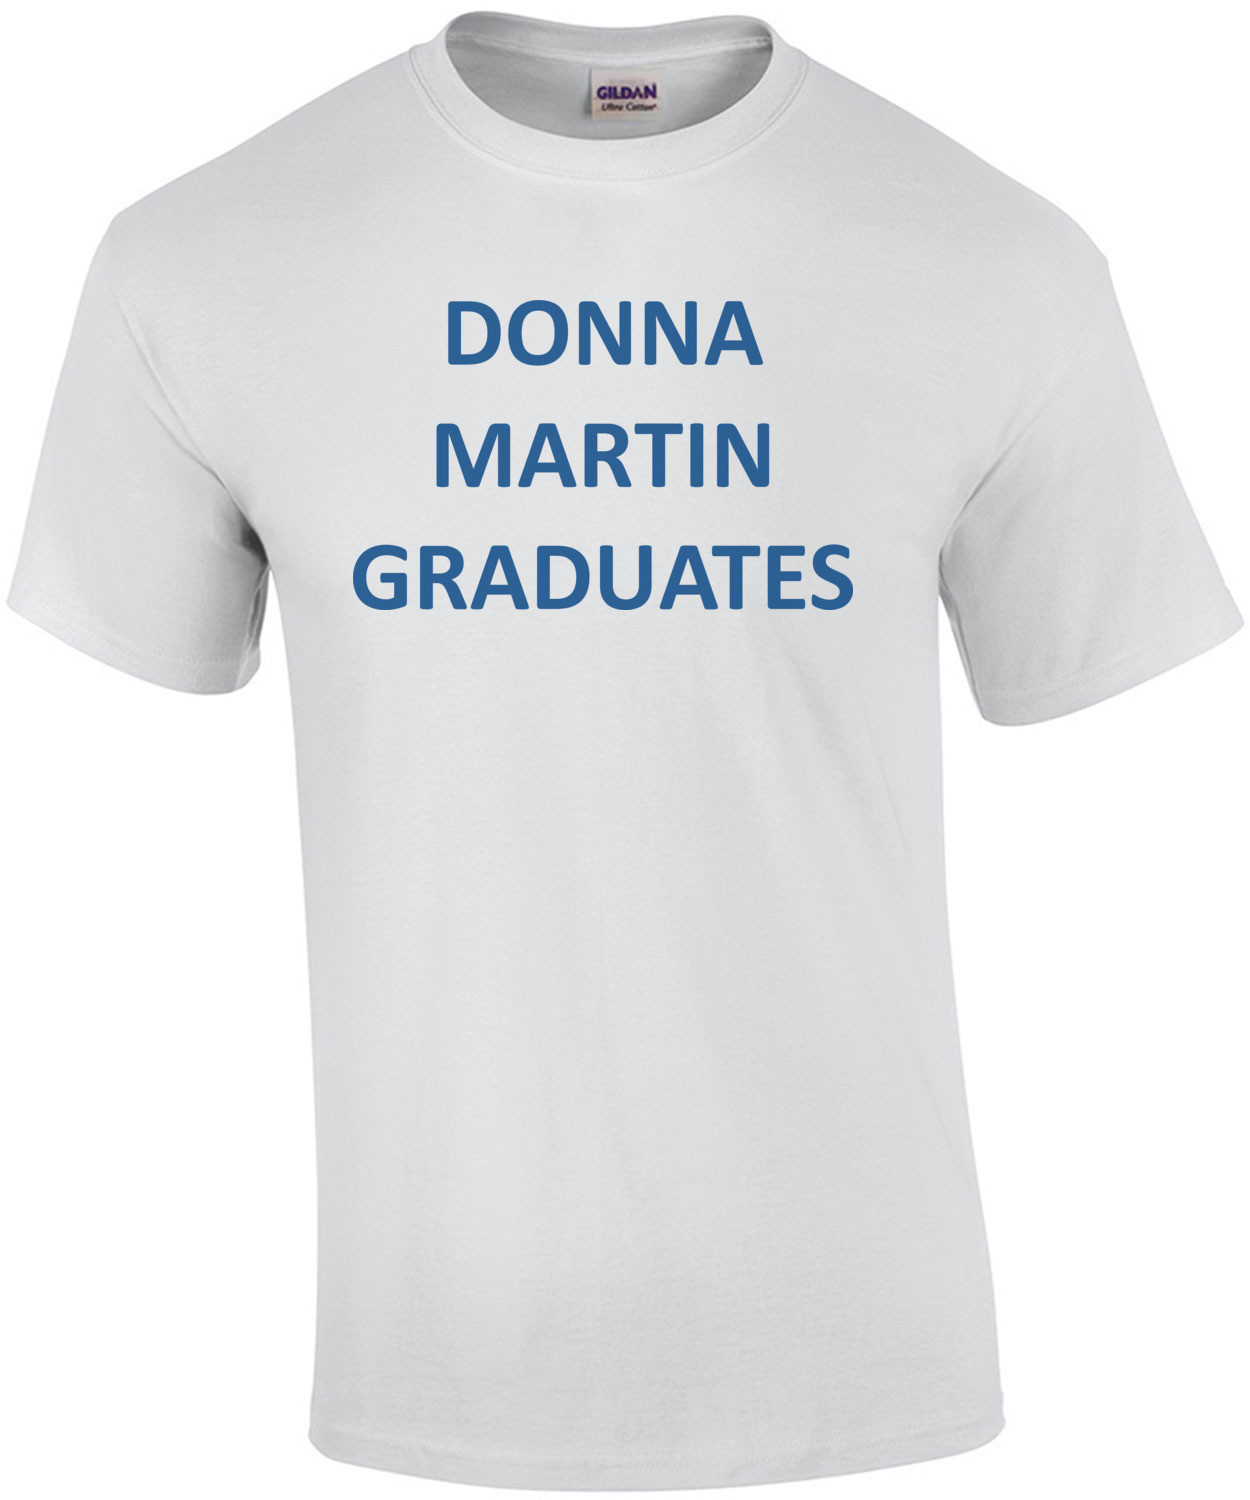 DONNA MARTIN GRADUATES T-Shirt